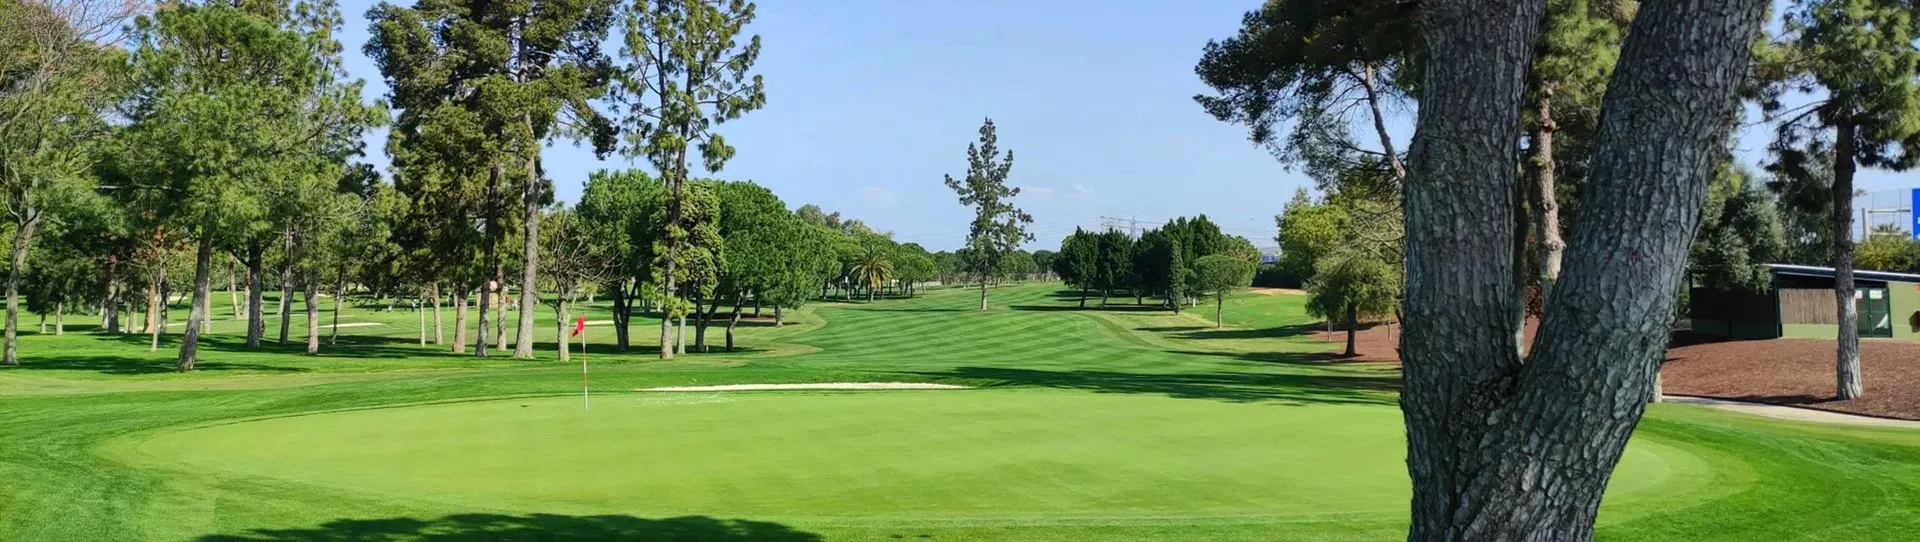 Spain golf courses - Real Club Pineda de Sevilla - Photo 5